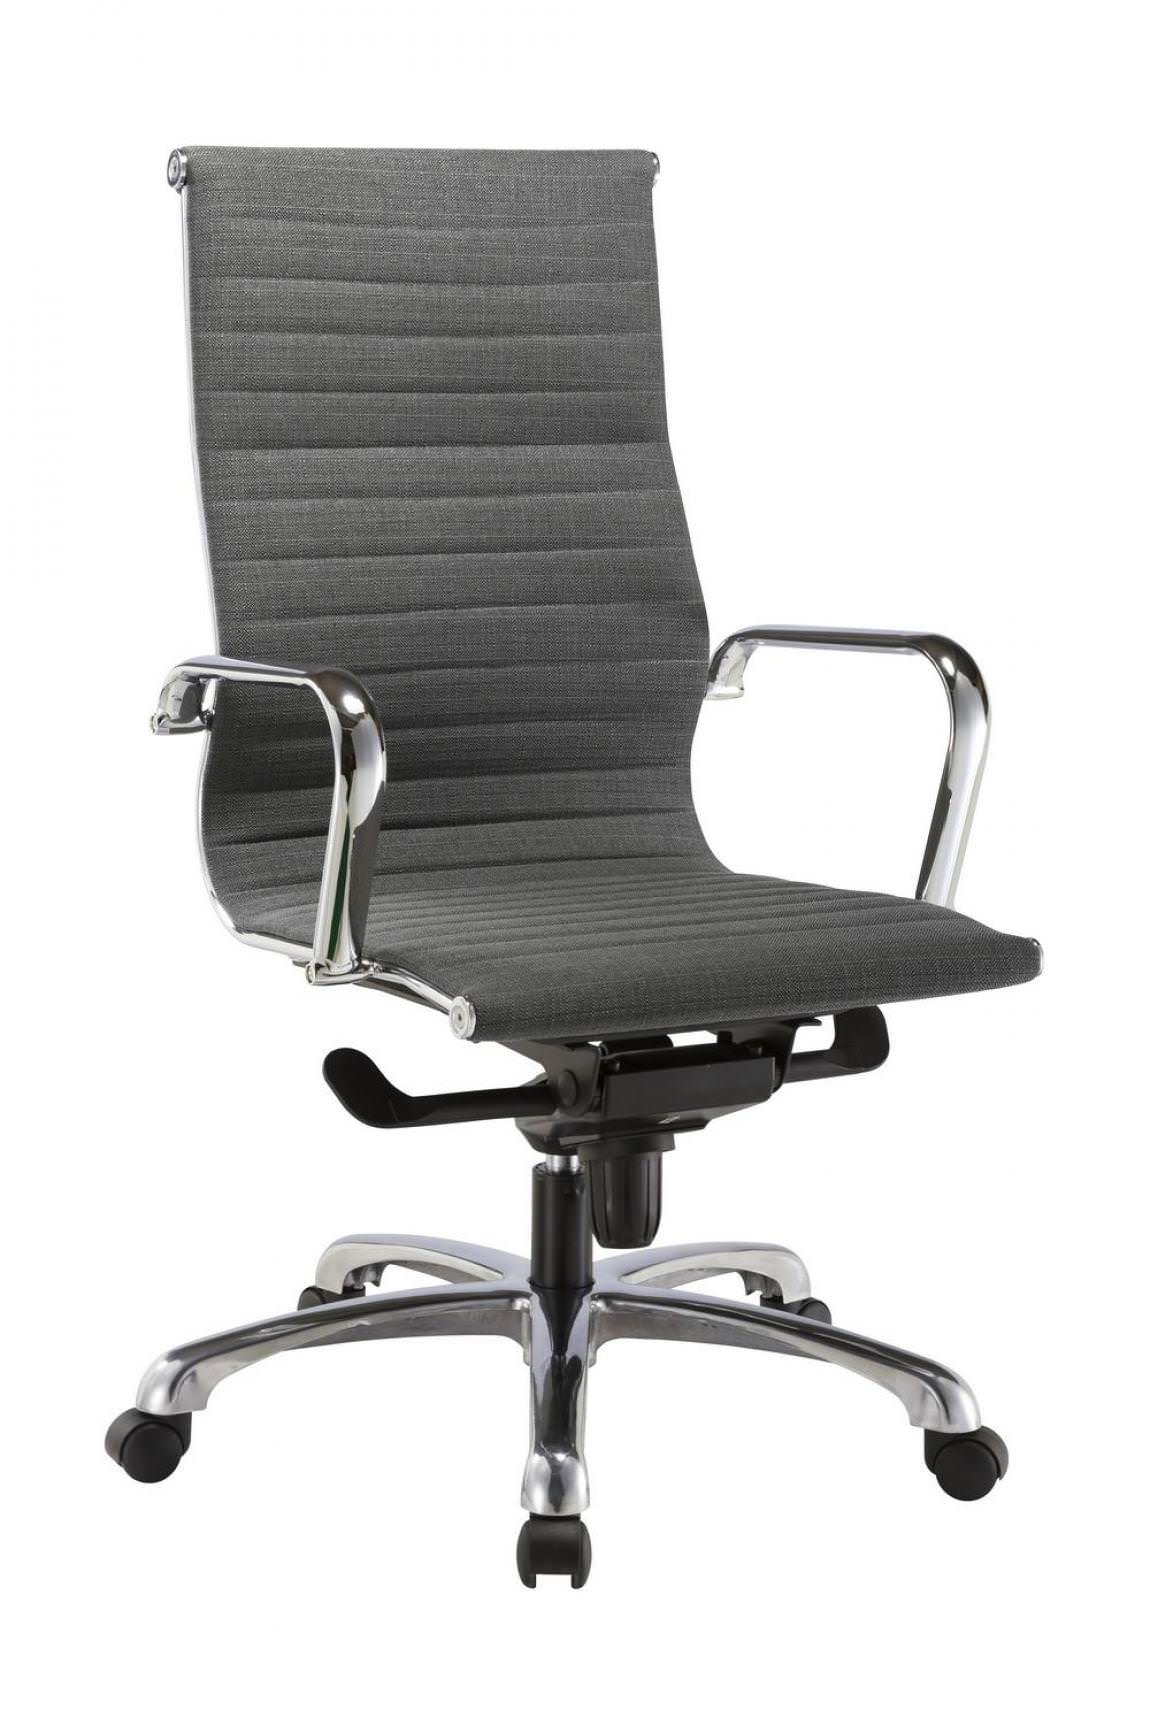 Jazz III High Back Executive Office Chair